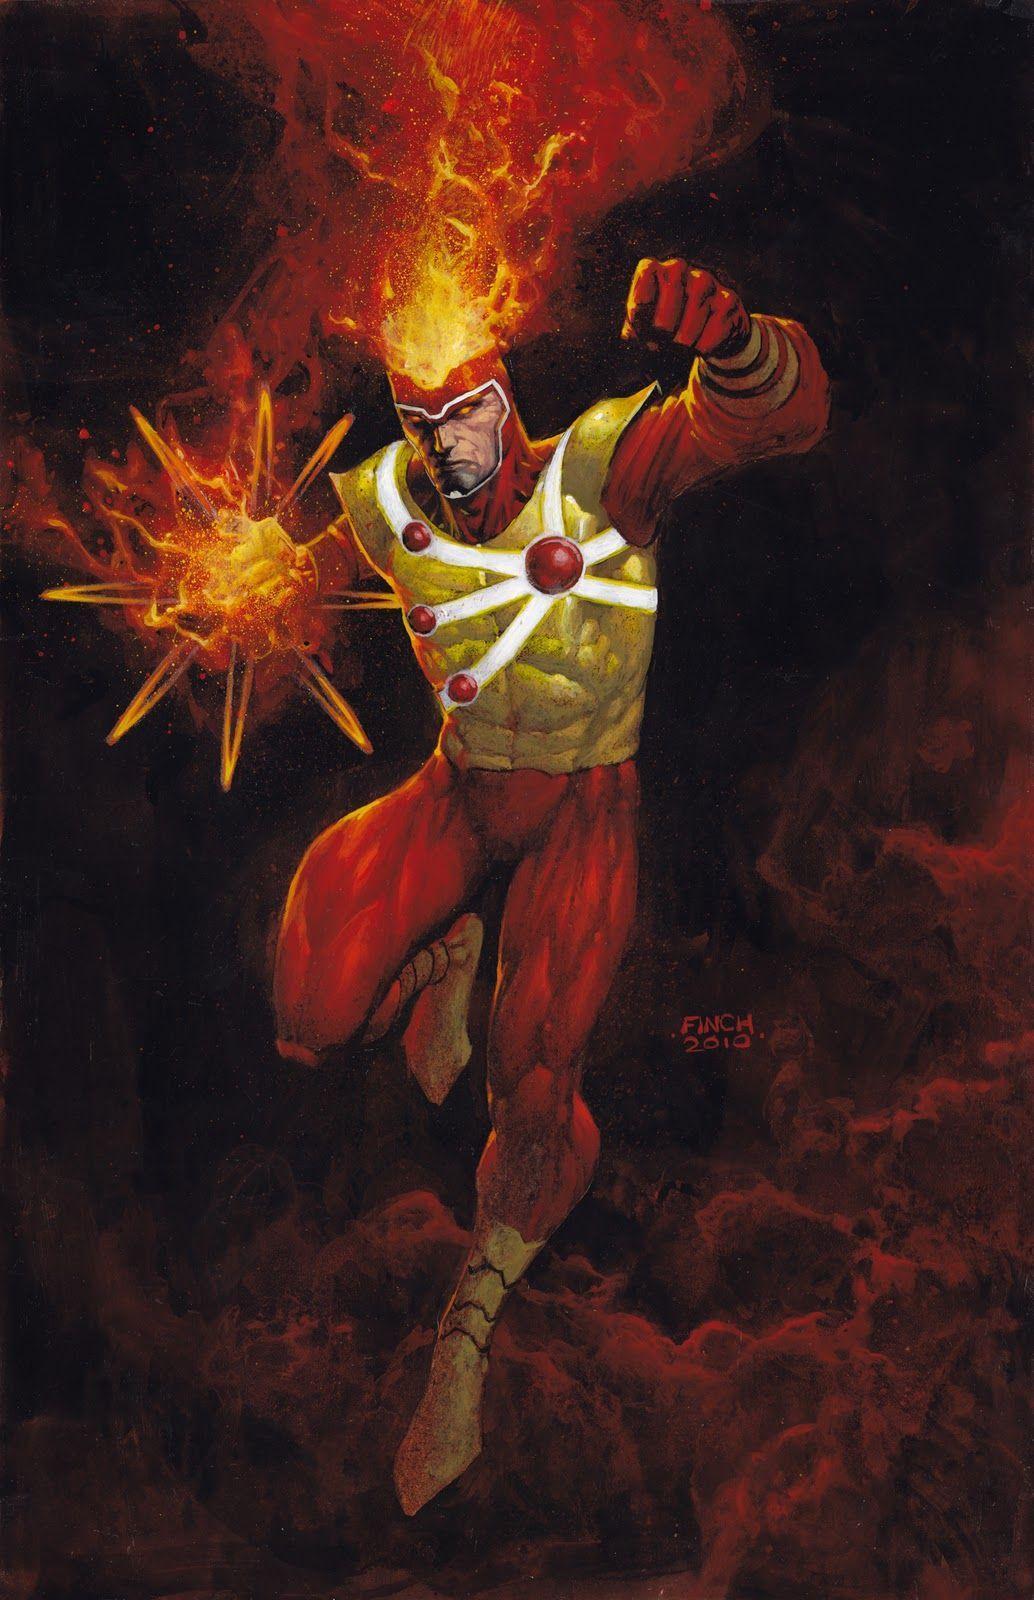 best image about Firestorm. Legends, Professor